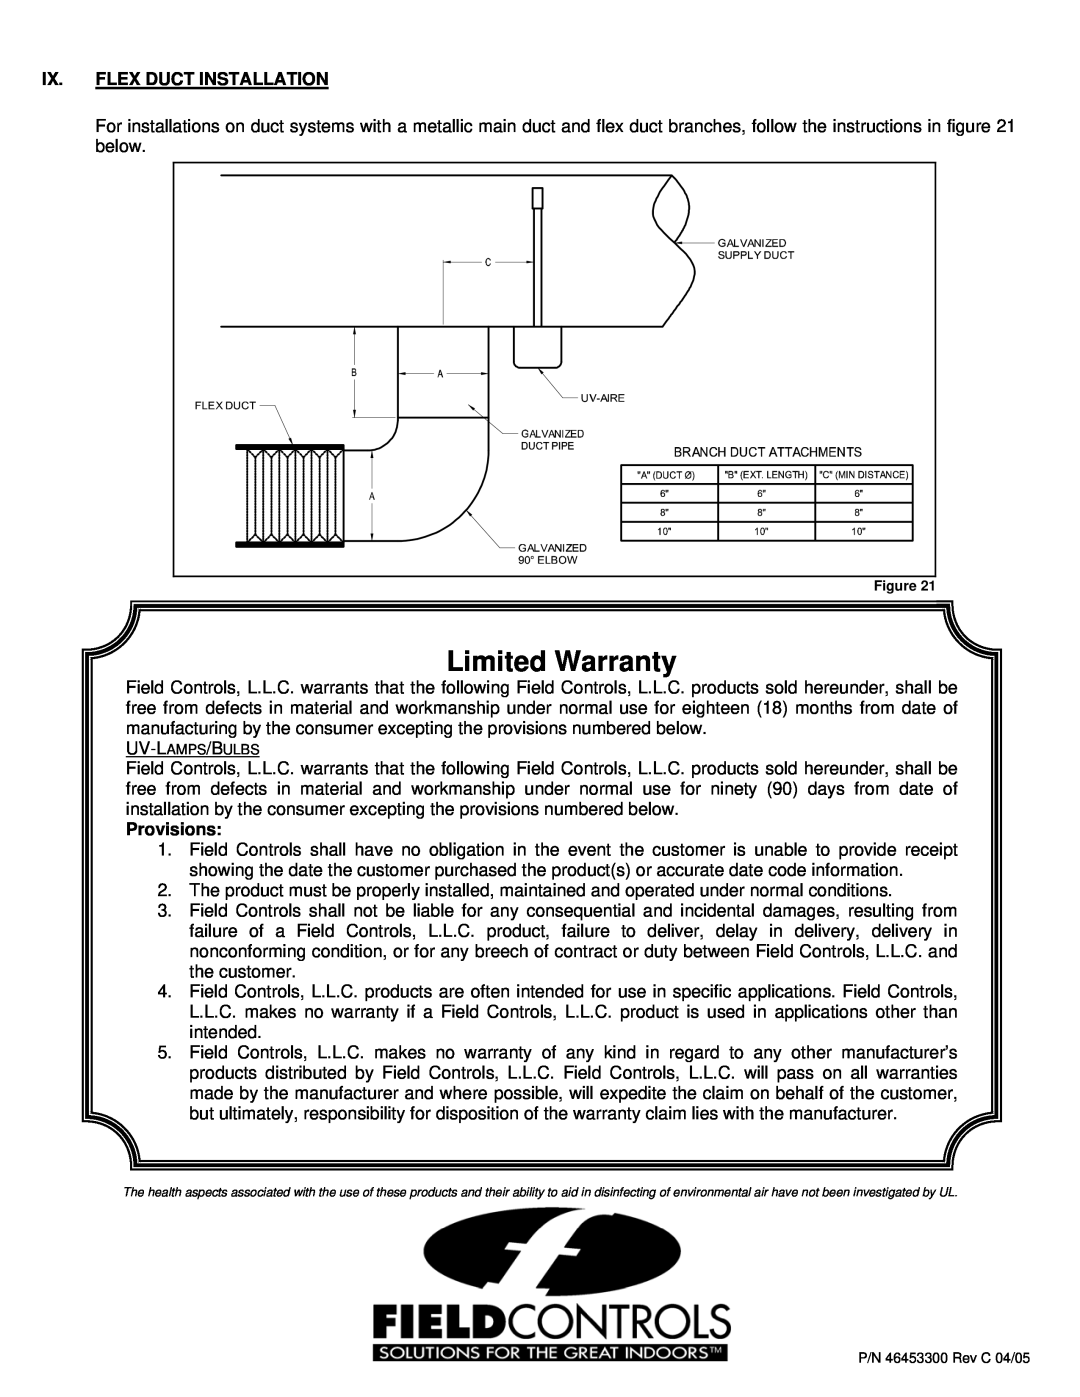 Field Controls UV-18X installation instructions Ix. Flex Duct Installation, Provisions, Limited Warranty 